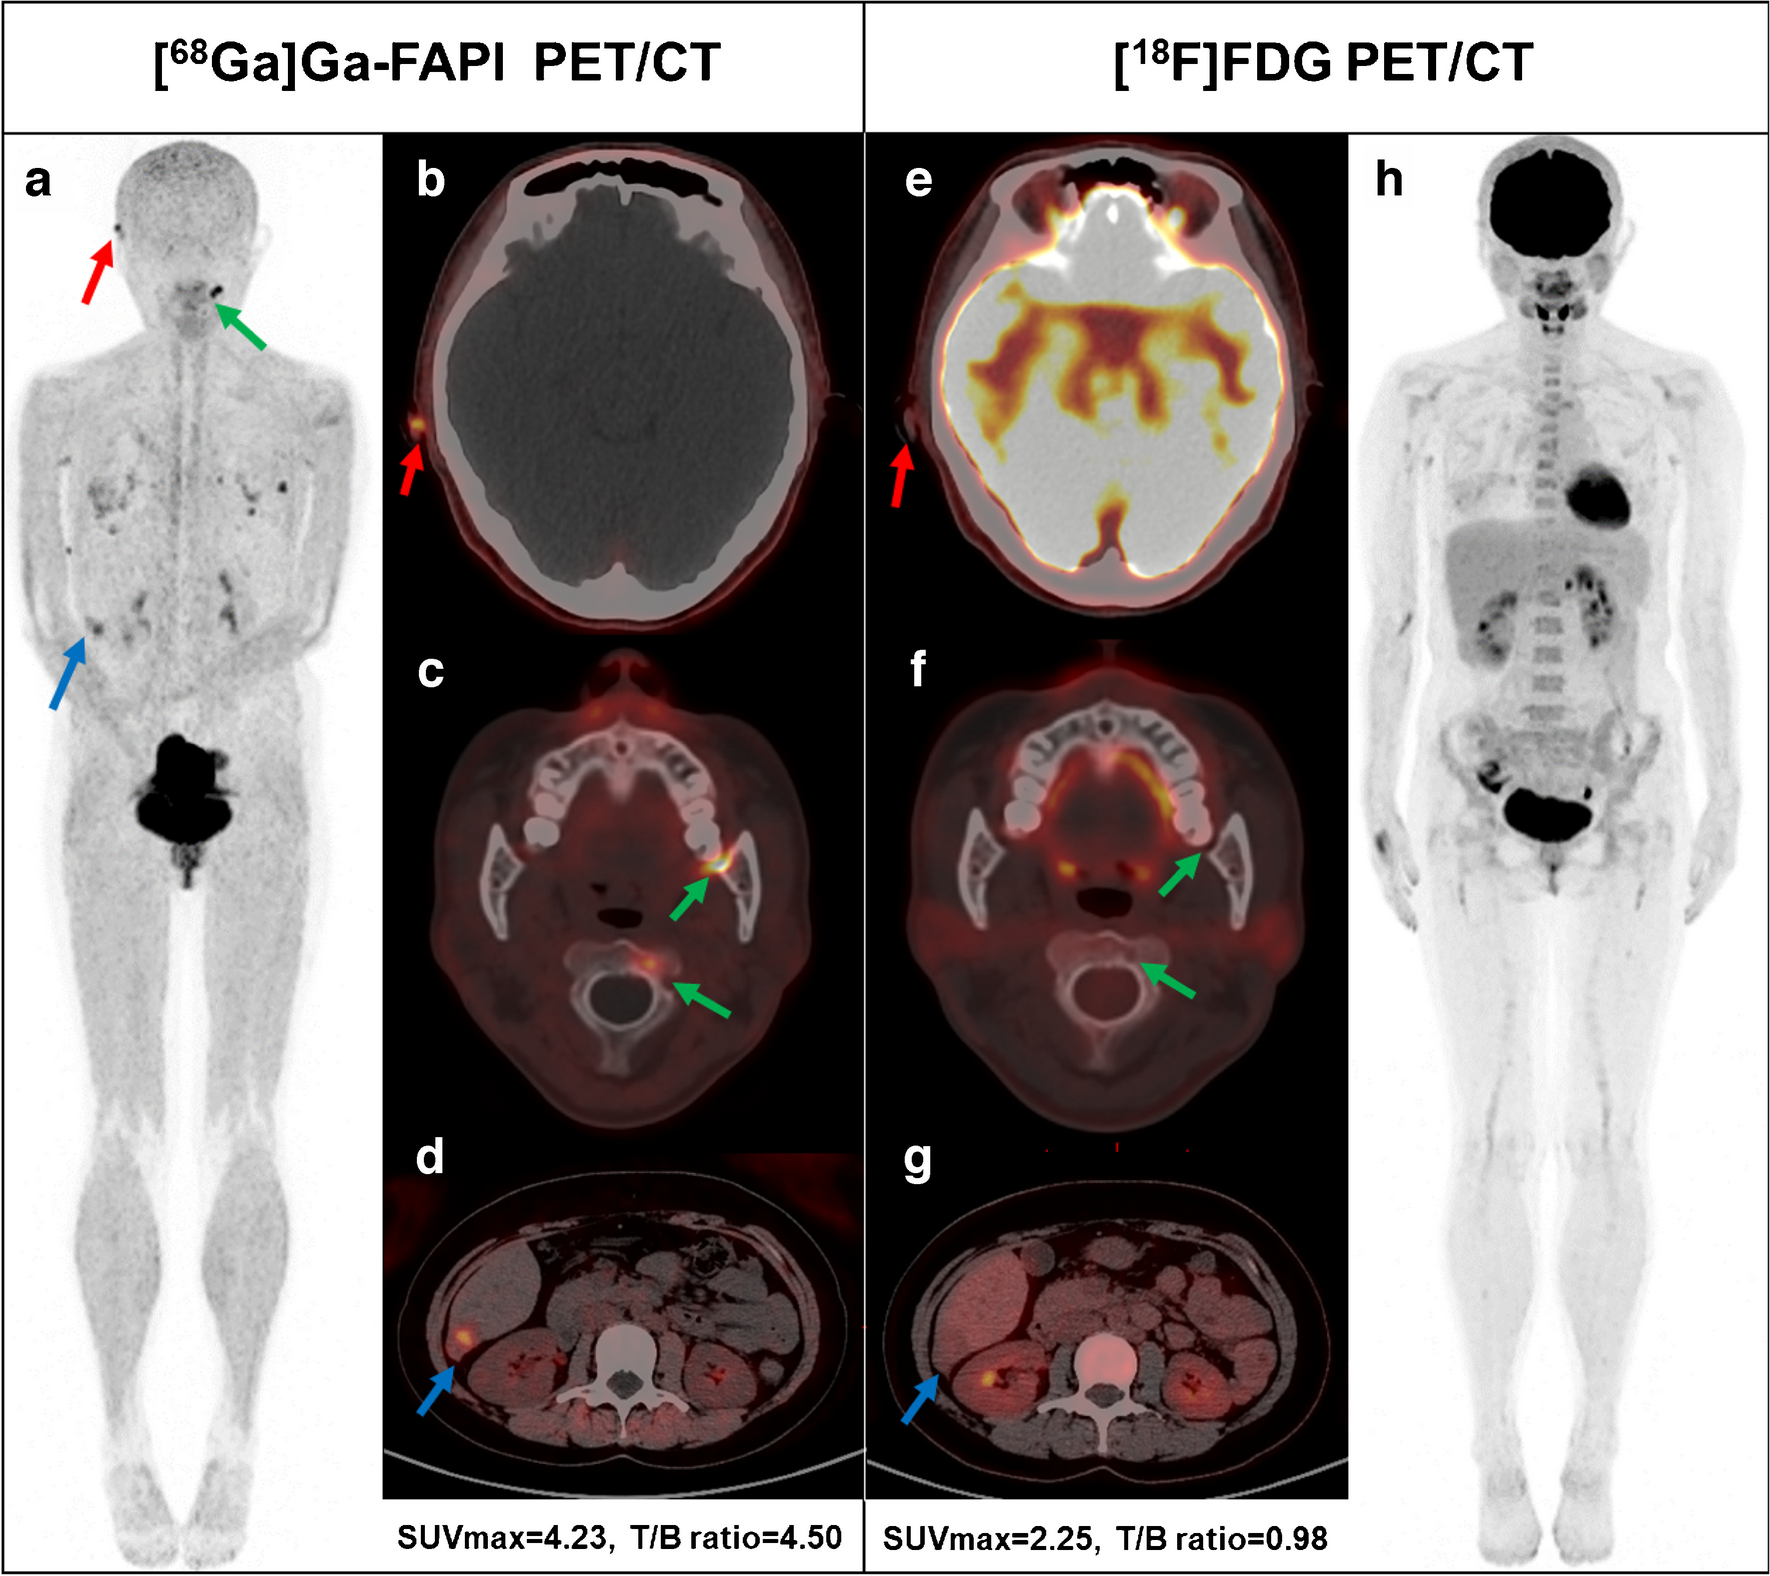 [68Ga]Ga-FAPI versus [18F]FDG PET/CT in the evaluation of Langerhans cell histiocytosis